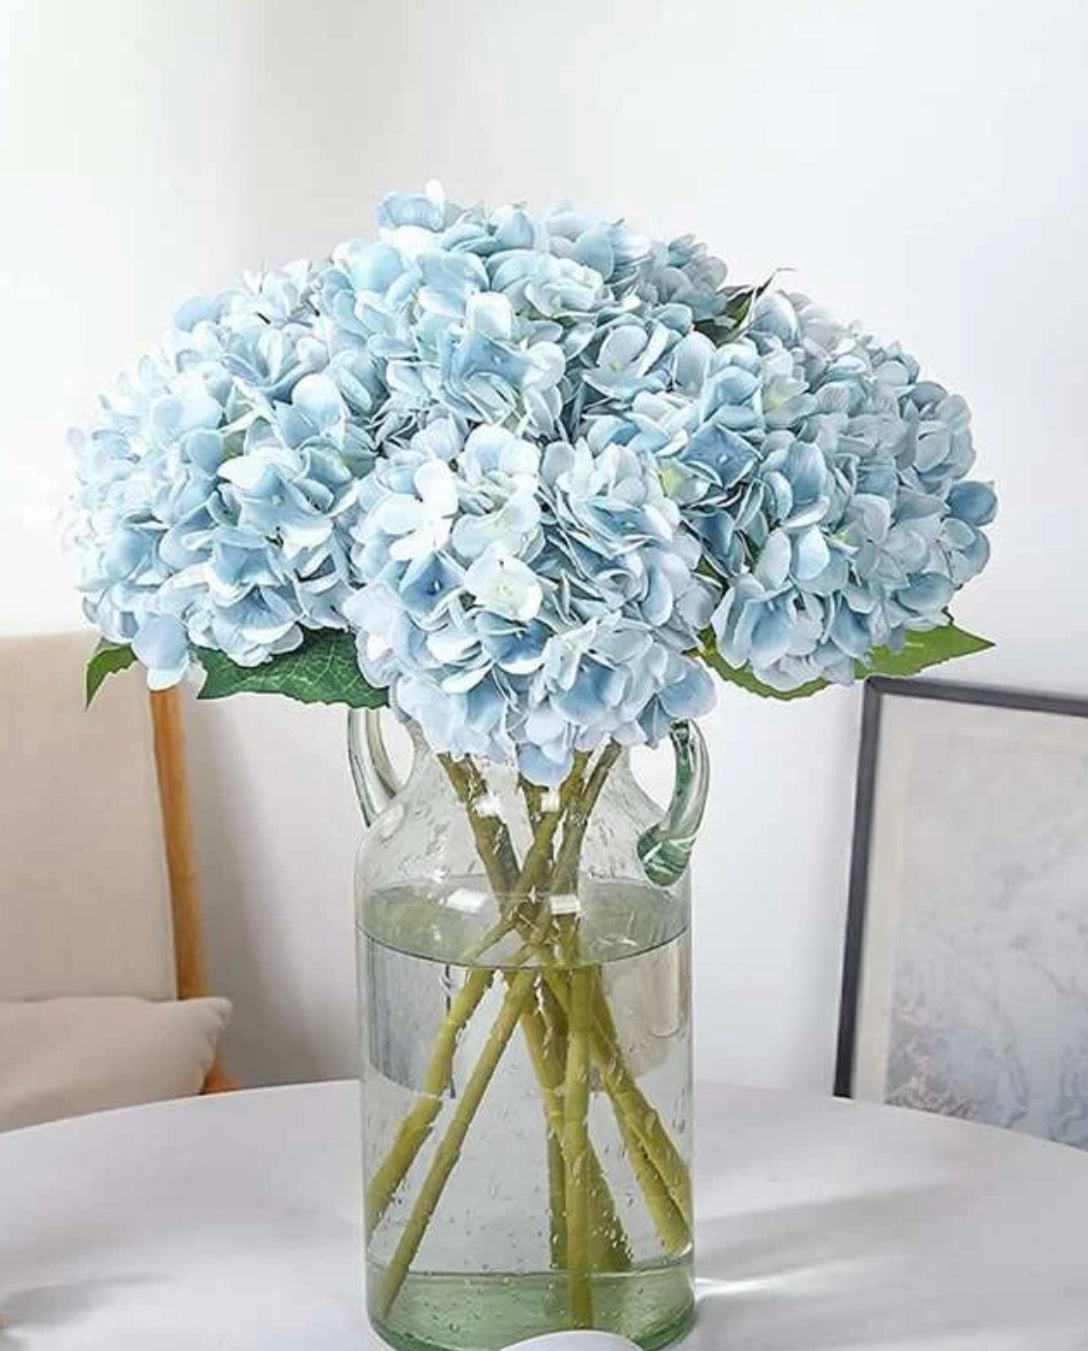 Blue flower bouquet